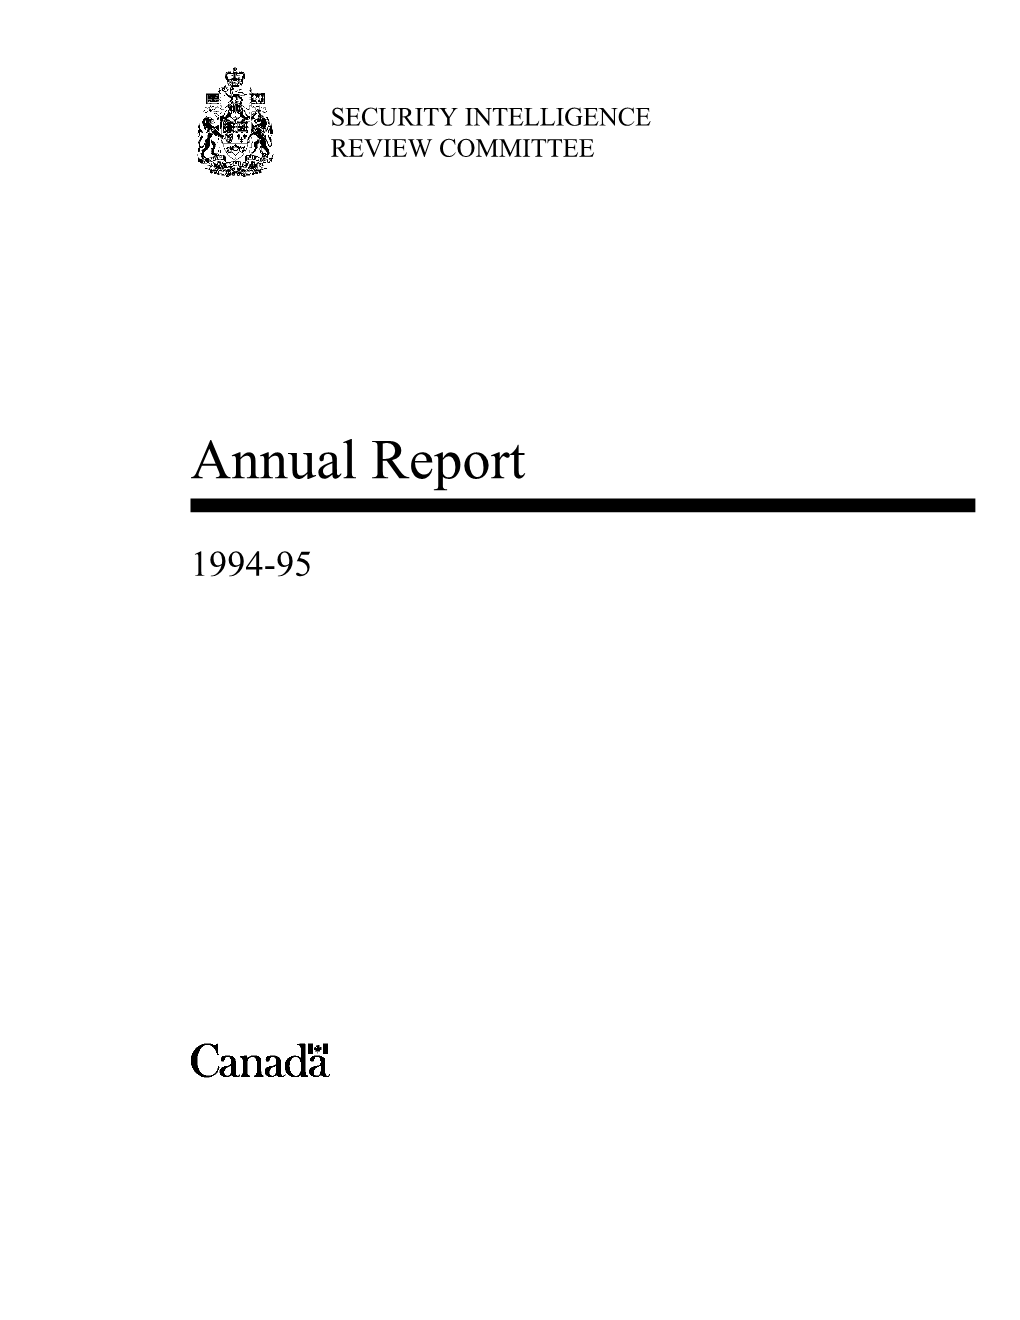 SIRC Annual Report 1994-95